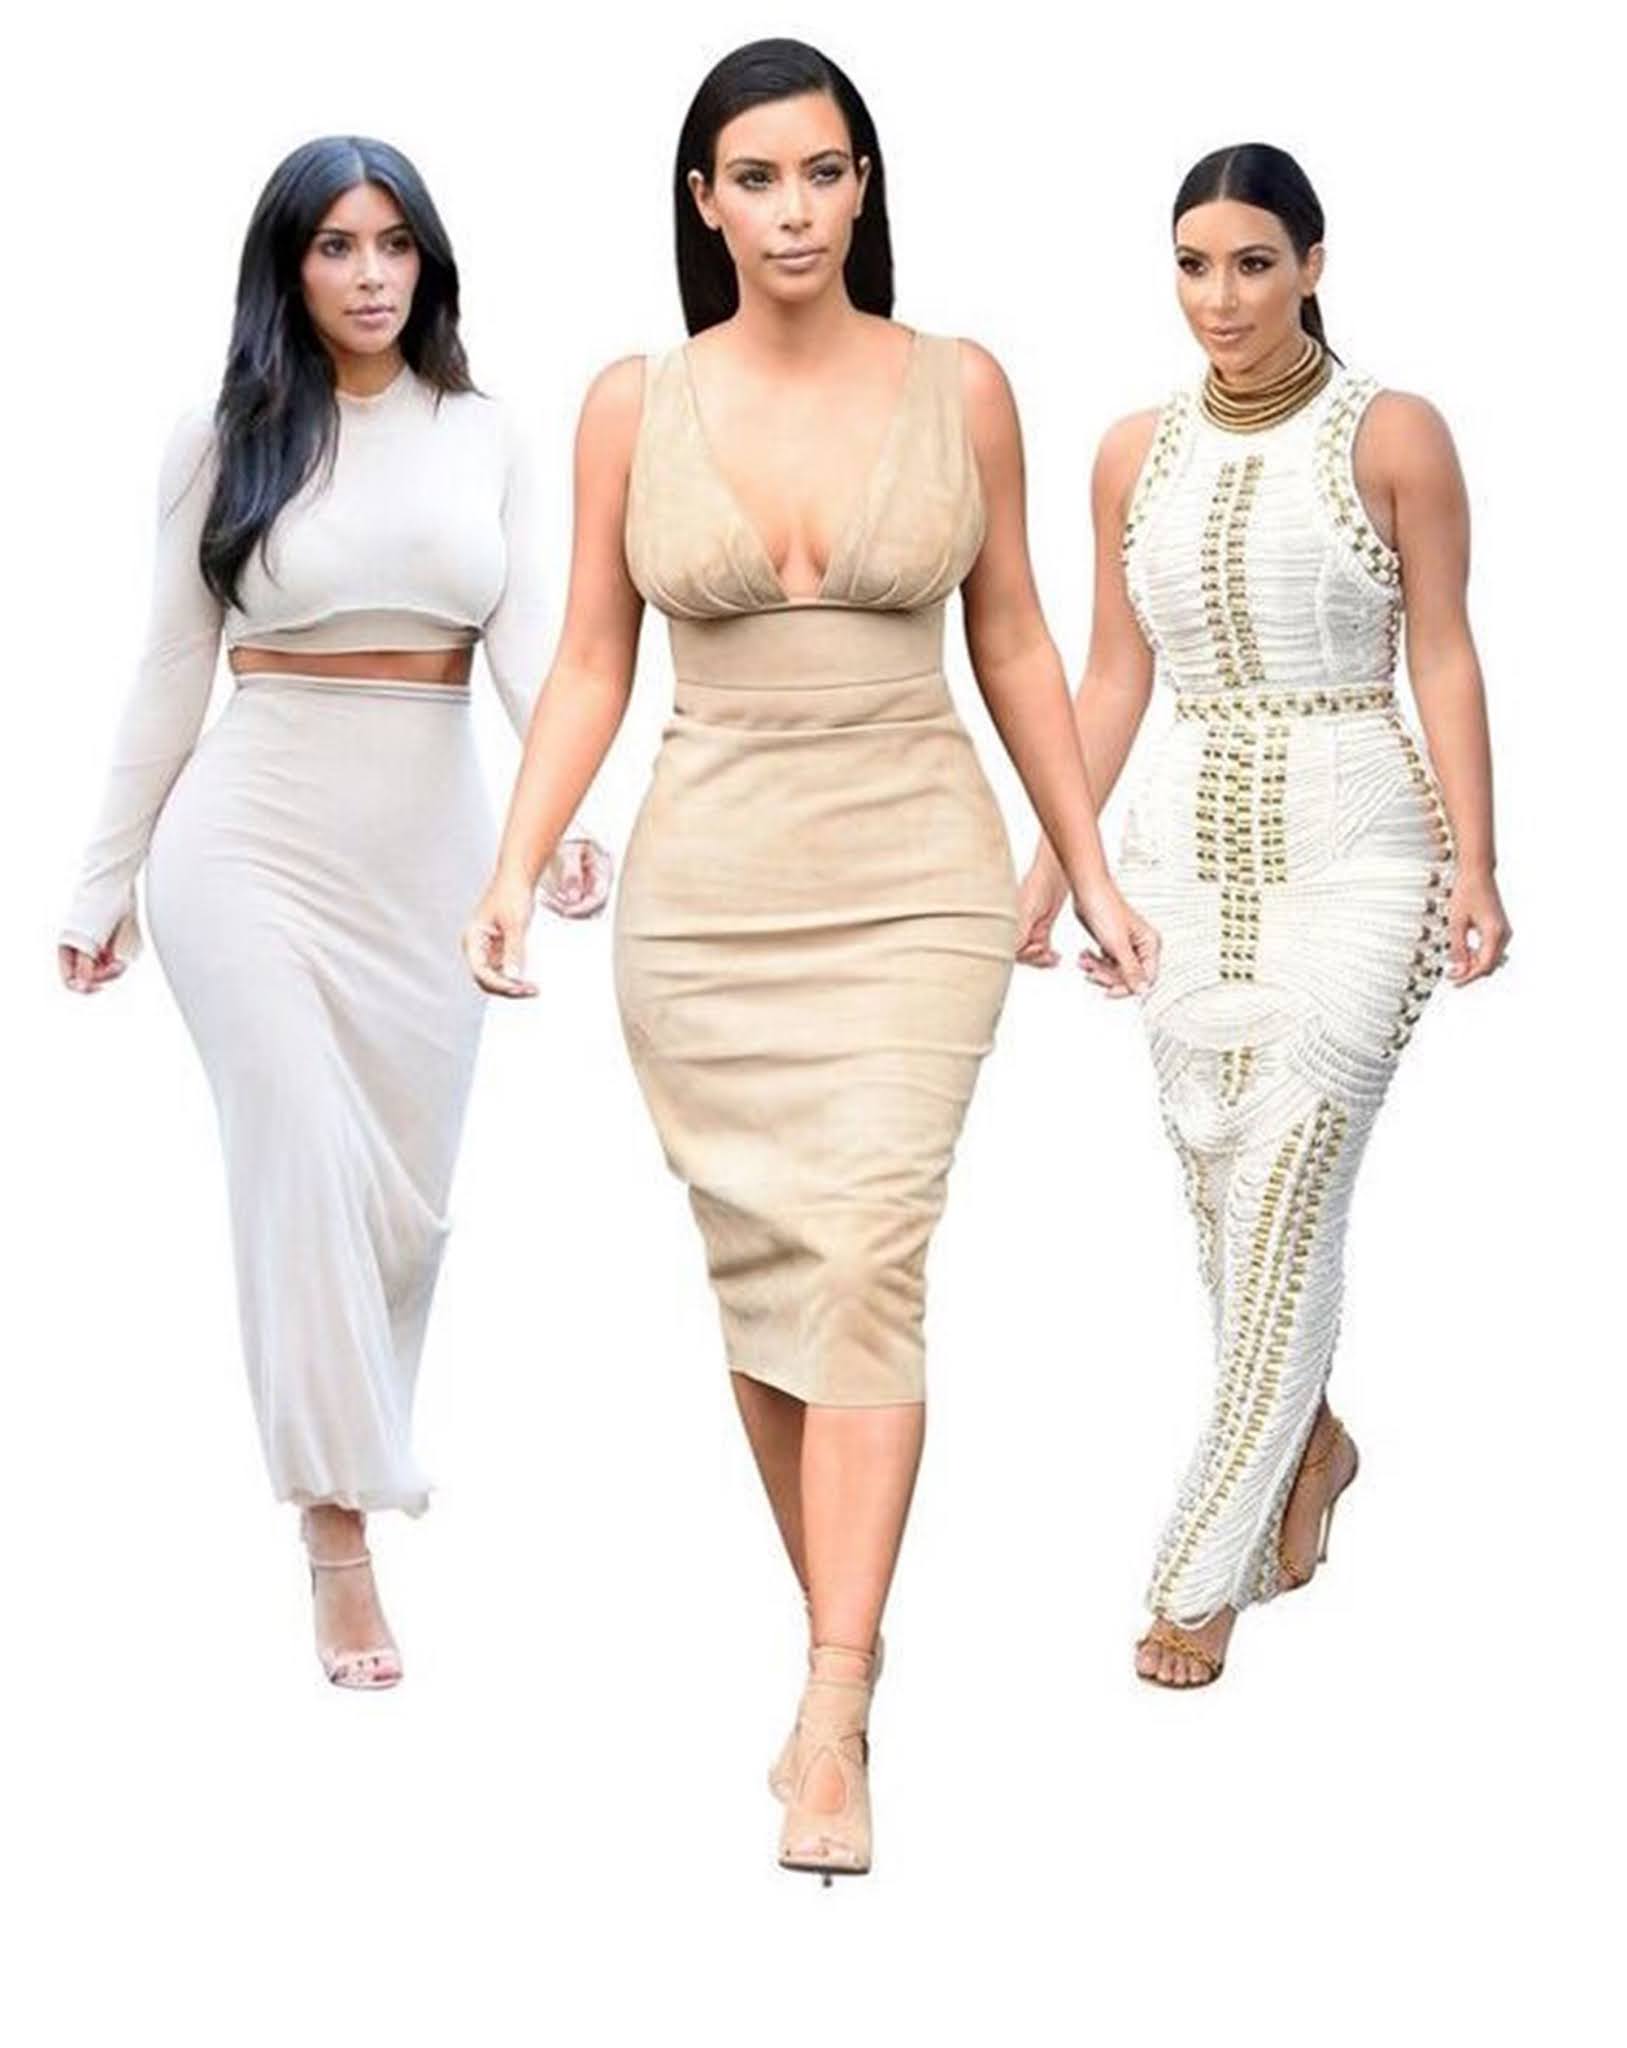 The Importance of Kim Kardashian